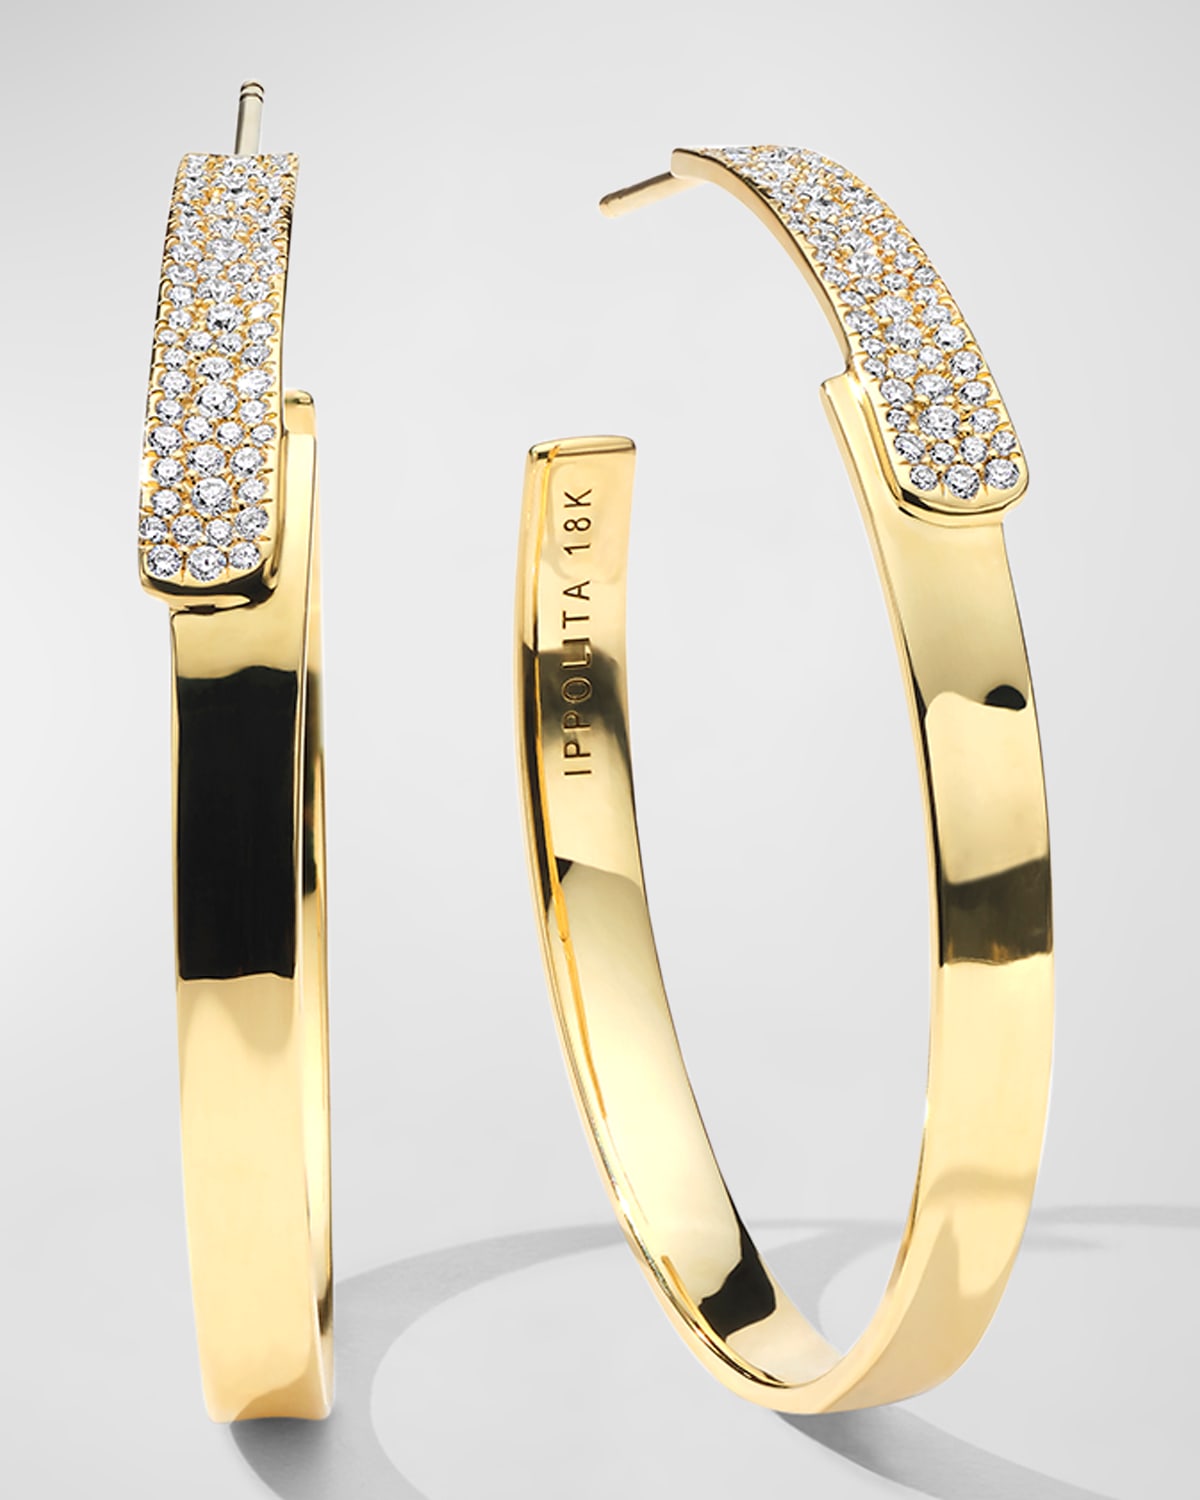 Overlapping #3 18K Gold Hoop Earrings with Diamonds